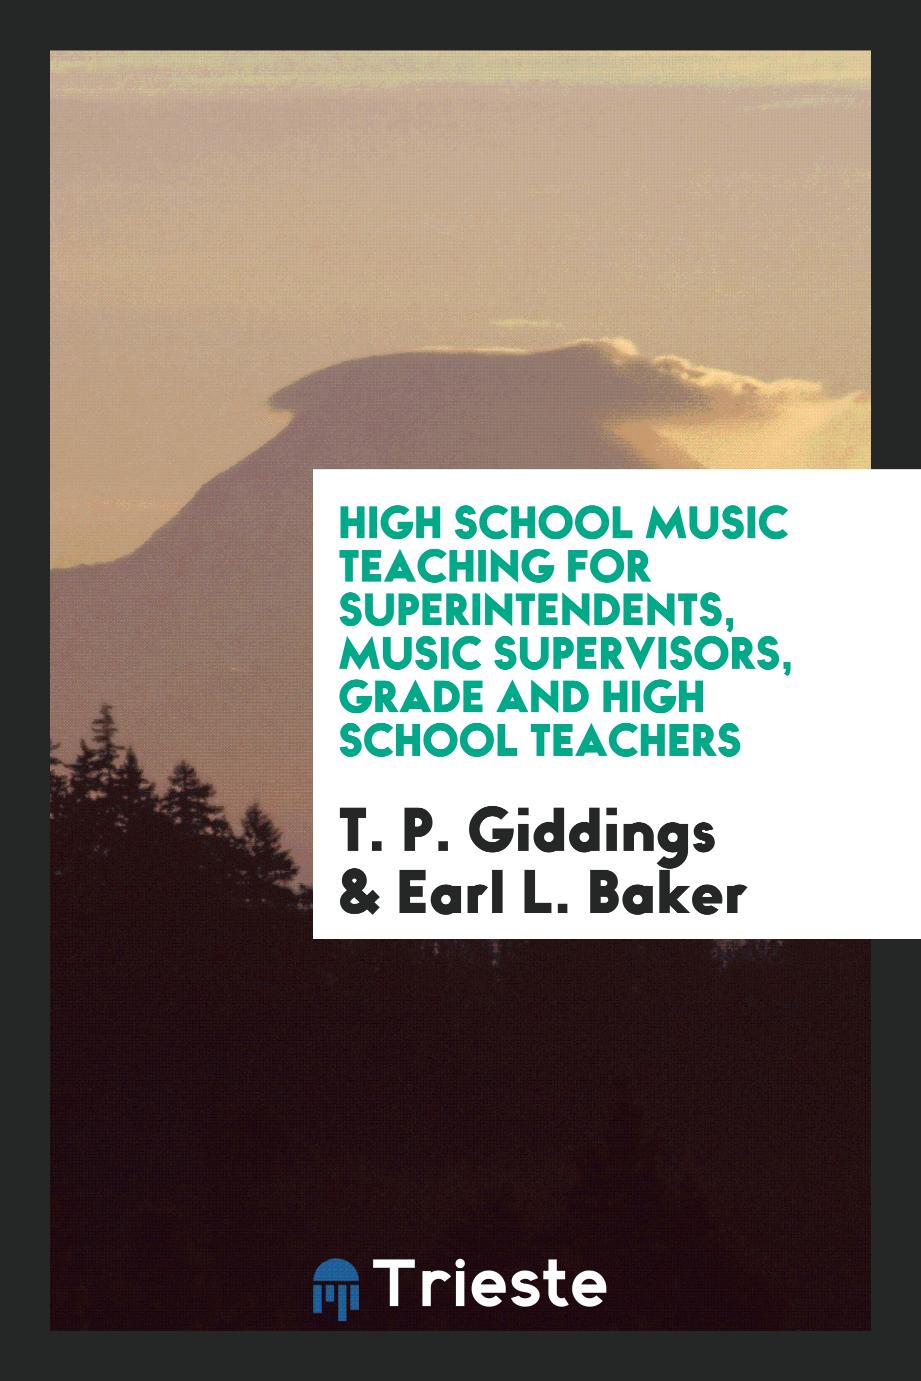 High School Music Teaching for Superintendents, Music Supervisors, Grade and High School Teachers